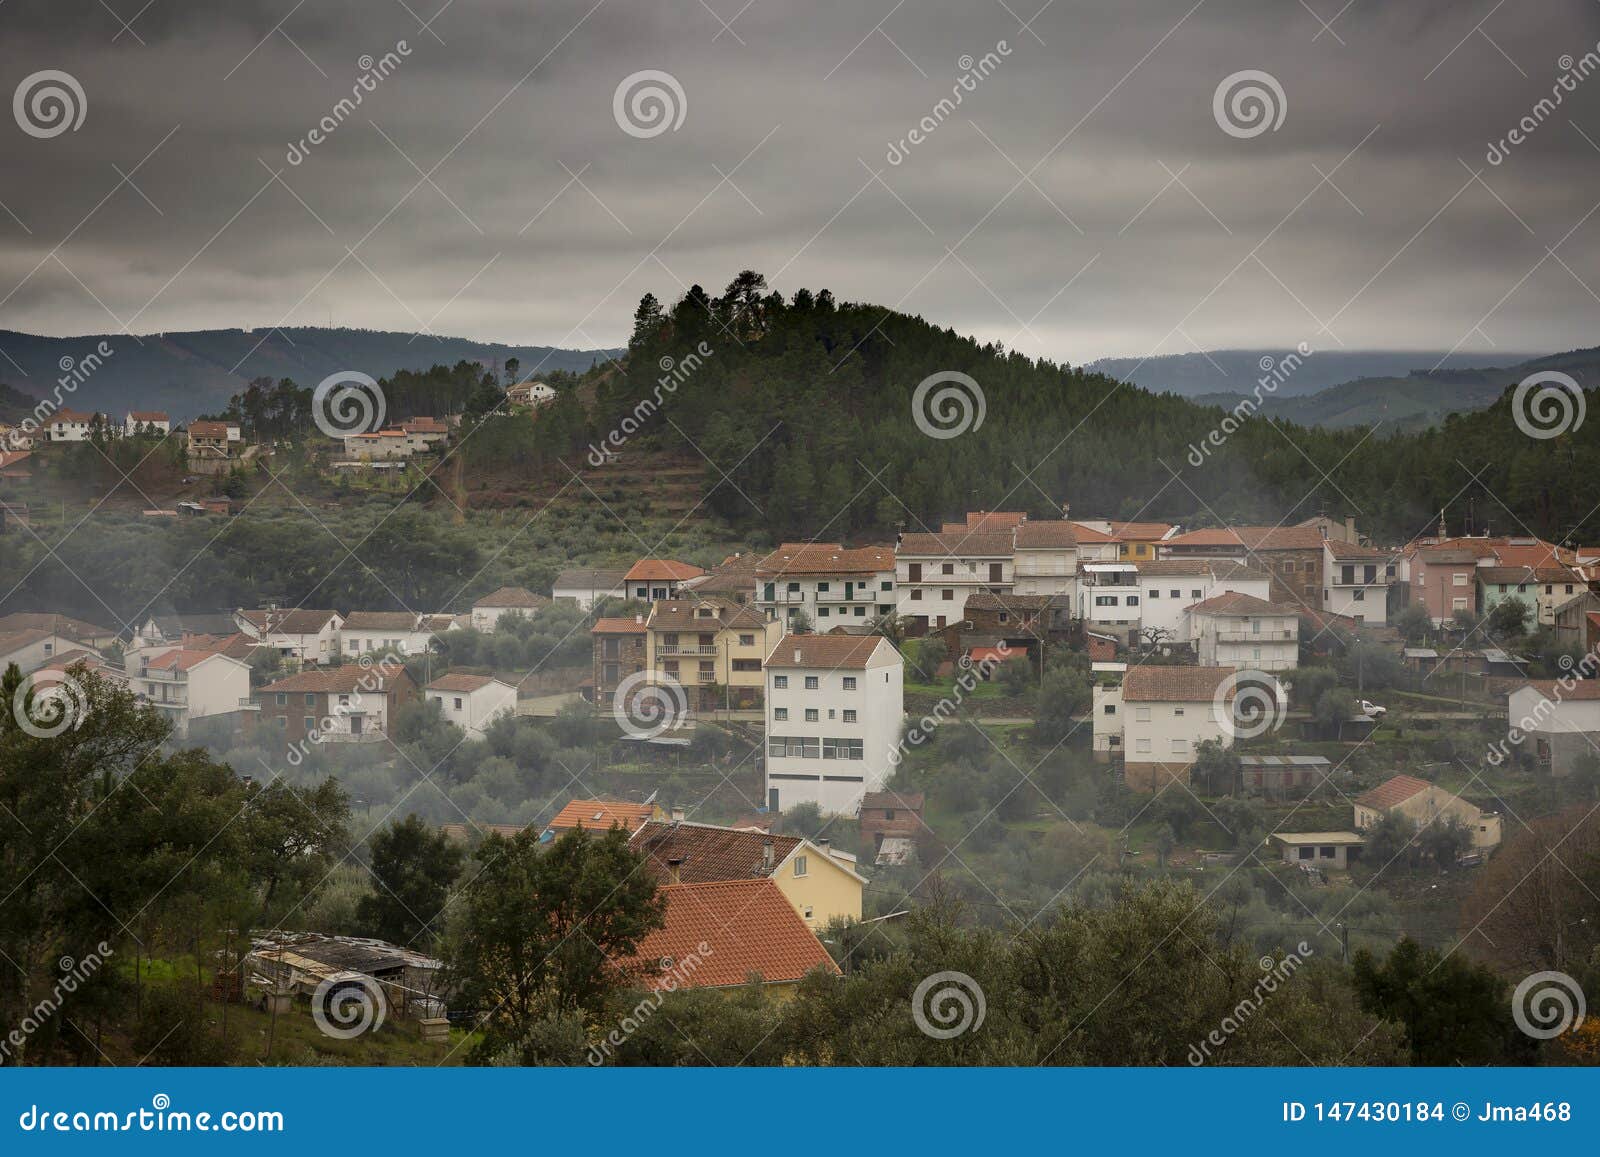 a view of barroca schist village